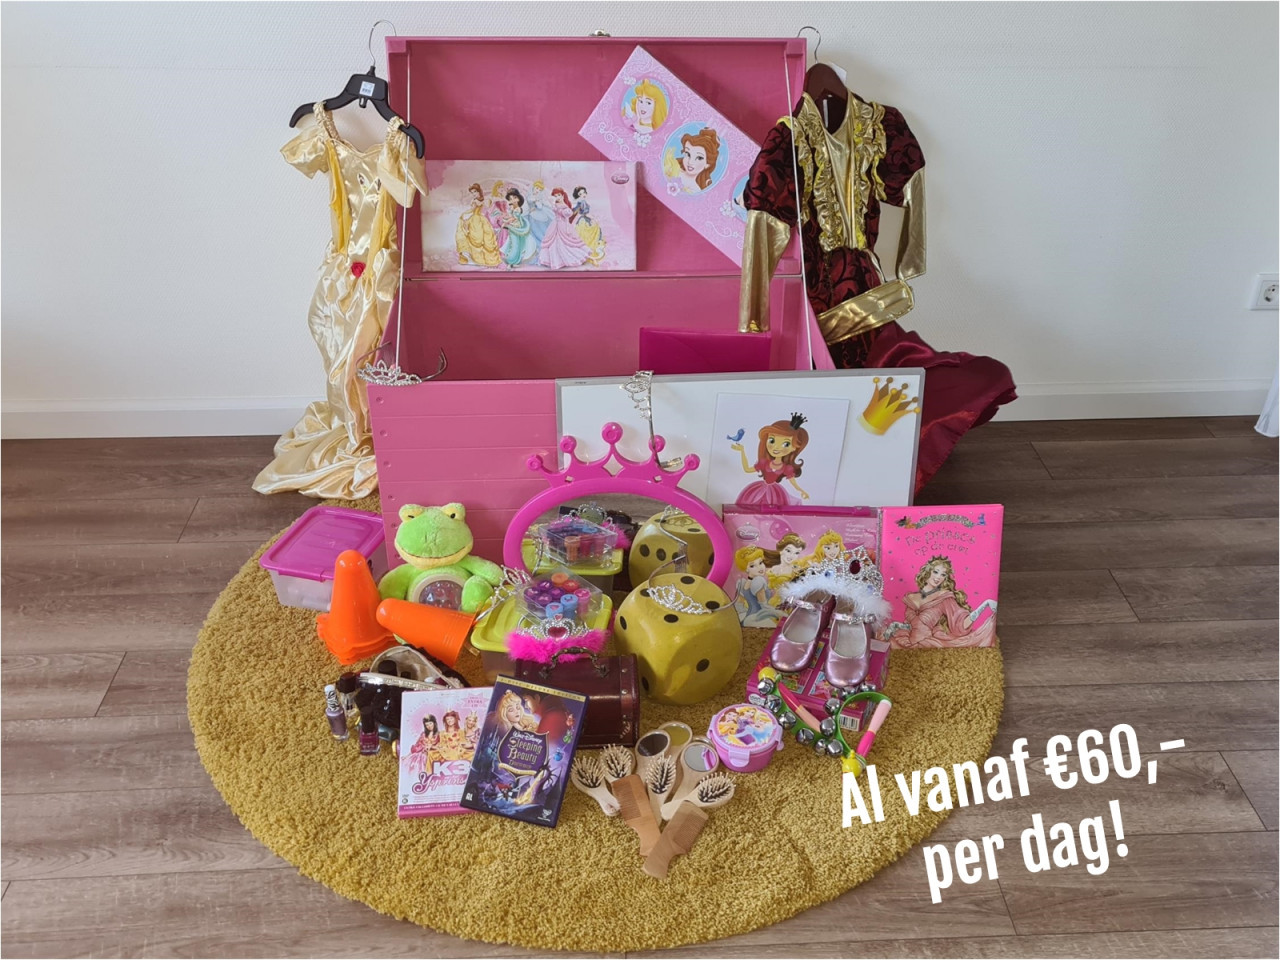 Kinderfeest Themakist Prinsessen : www.jump4joyspringkussenverhuur.nl